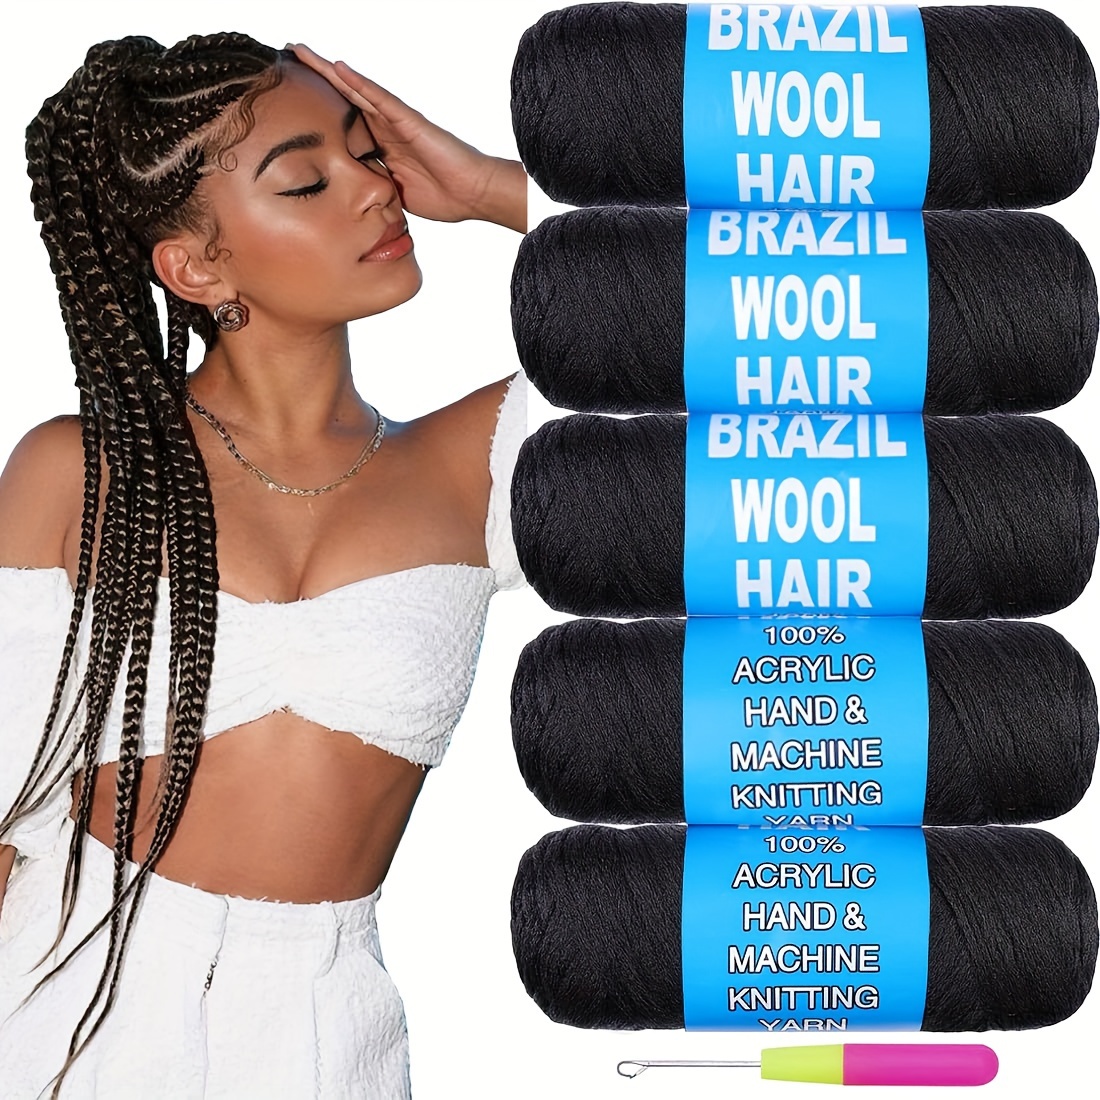 X2 Brazilian Wool Faux Locks, Braids, Twists, Knitting Brazil Blue. Yarn